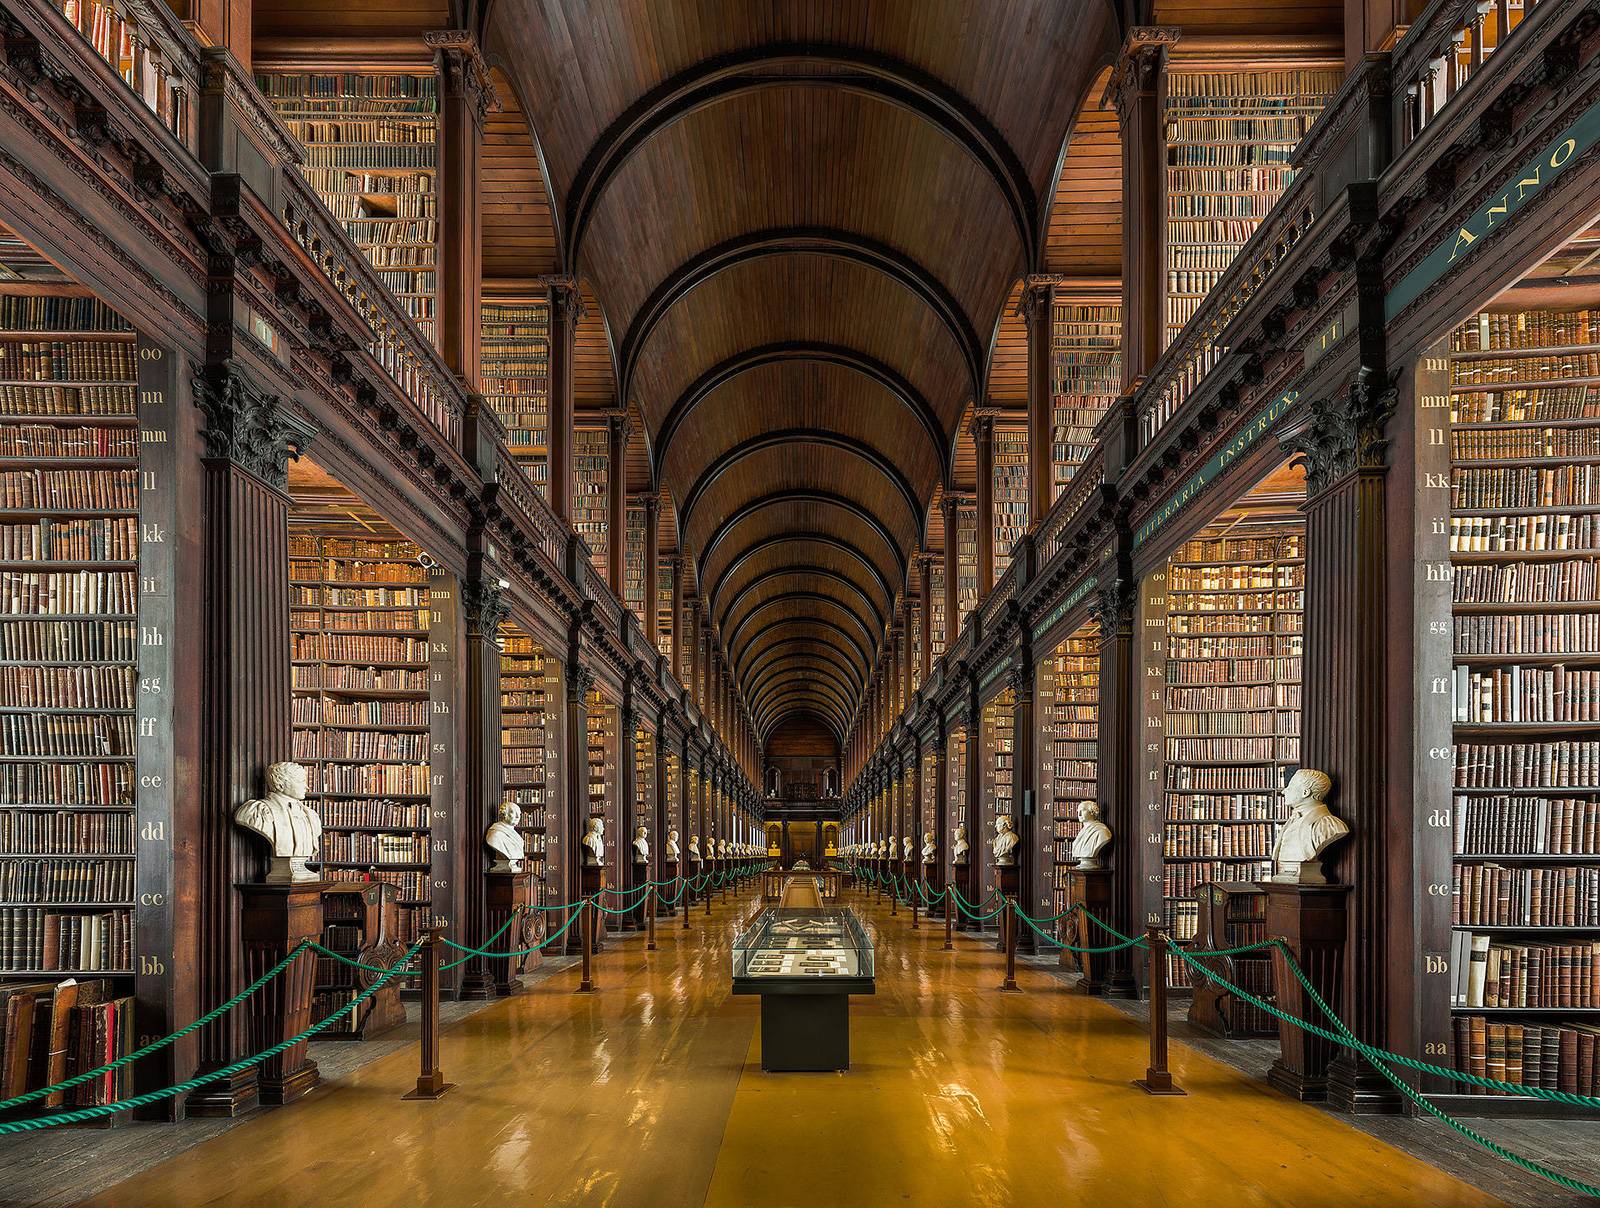 300 year old library in Dublin, Ireland